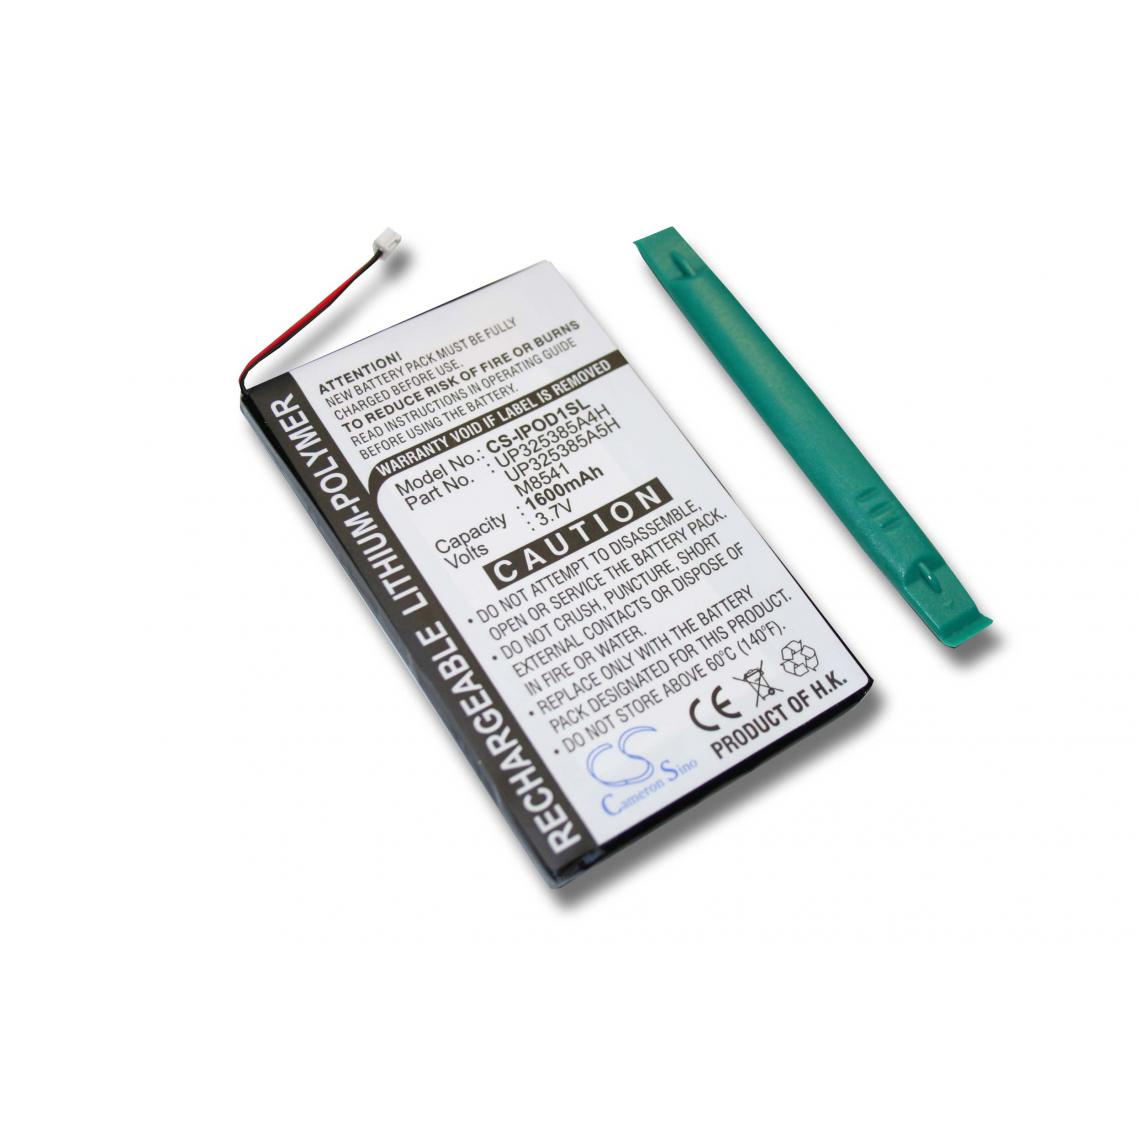 Vhbw - vhbw Batterie compatible avec Apple iPod 5GB M8697LL/A lecteur MP3 baladeur MP3 Player (1600mAh, 3,7V, Li-polymère) - Batteries électroniques